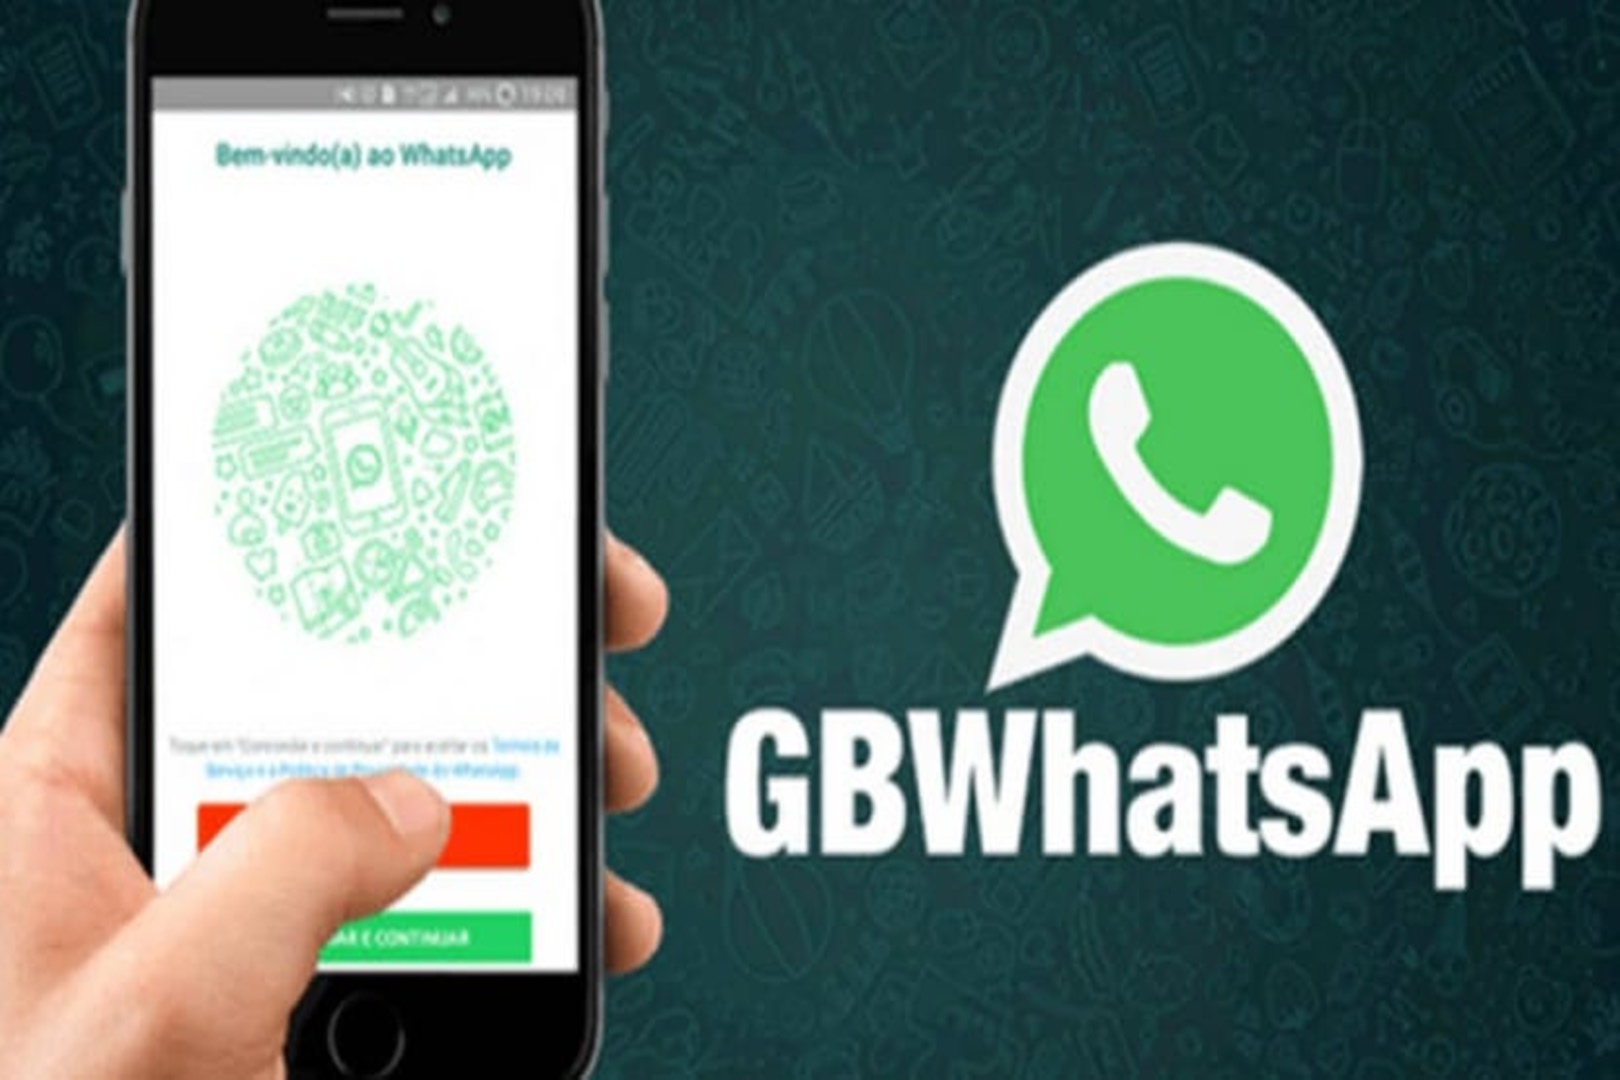 Download GB WhatsApp Pro (GB WA Pro) 2023: Link Aplikasi dan Cara Instal, Penuh Fitur Kece!